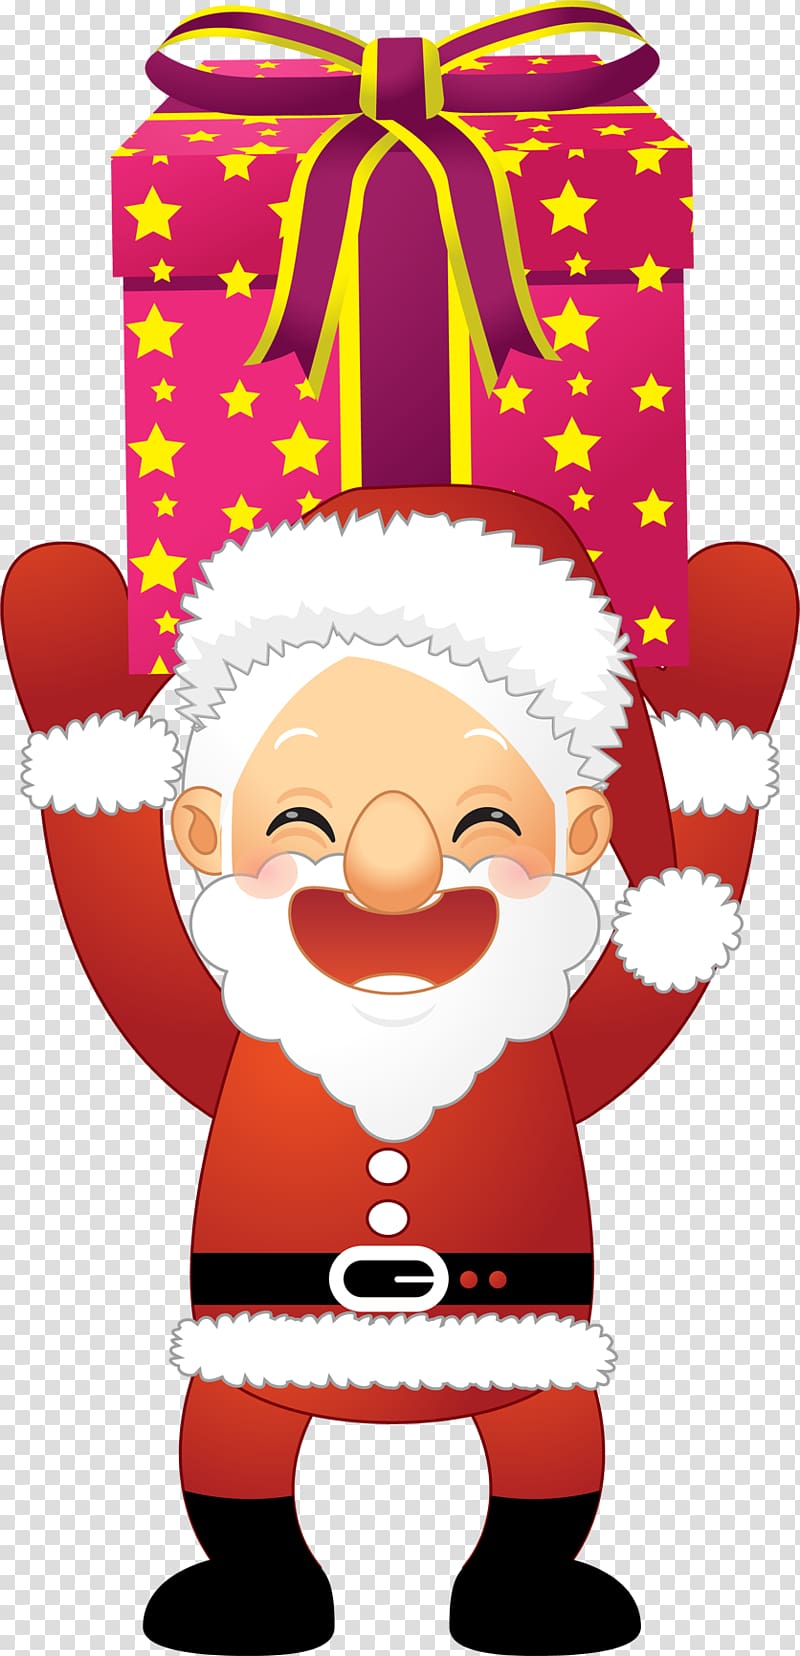 Santa Claus Christmas ornament Gift , Send gift Santa Claus transparent background PNG clipart